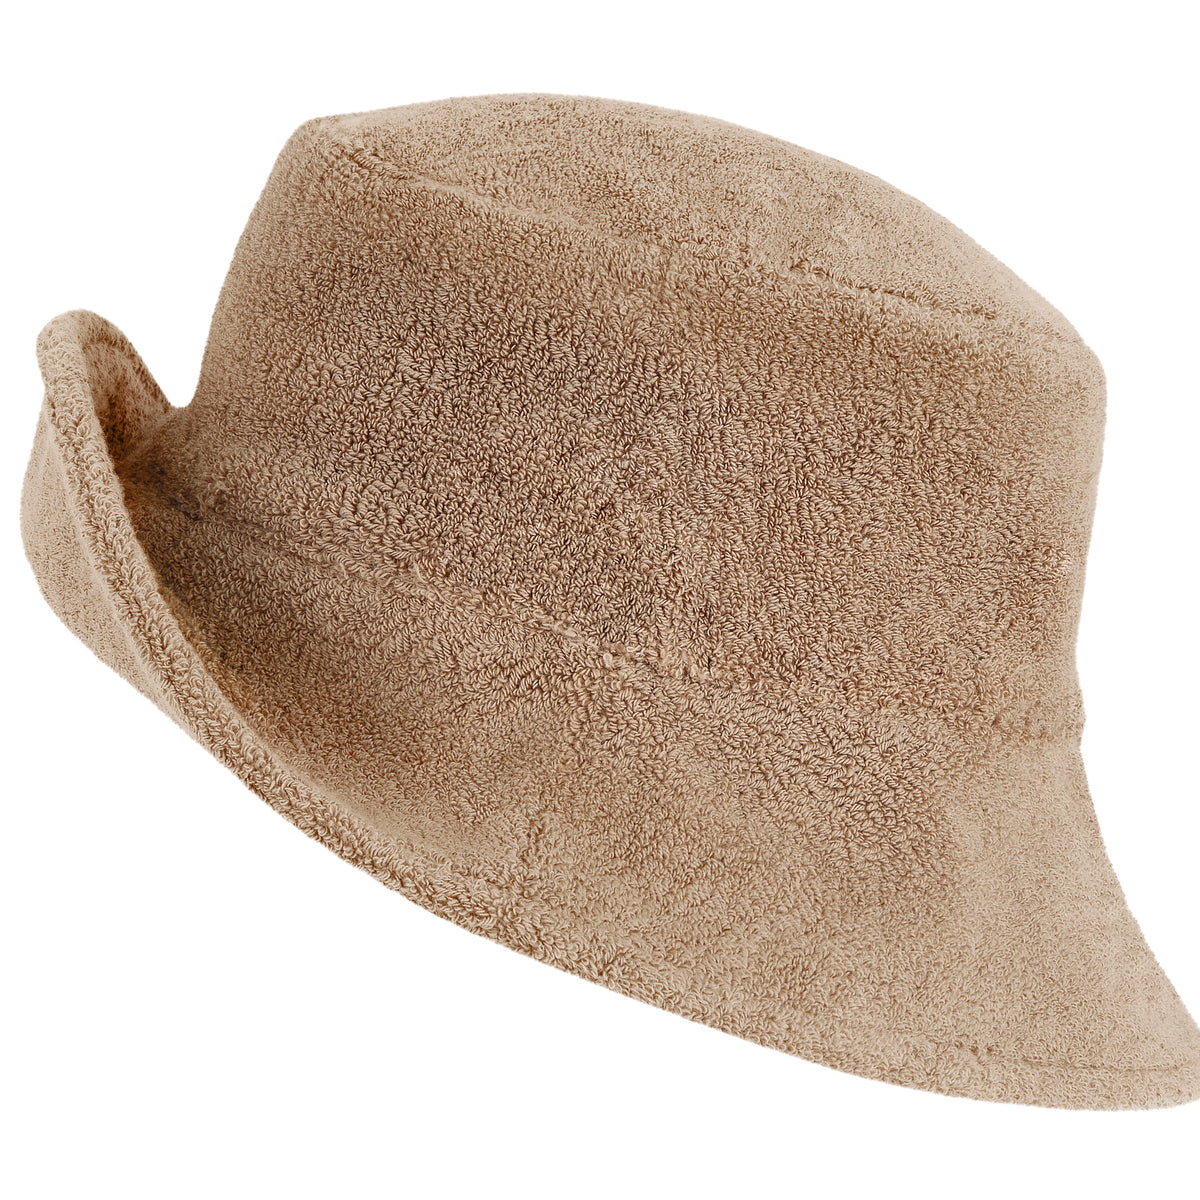 Husk Towelling Beach Hat